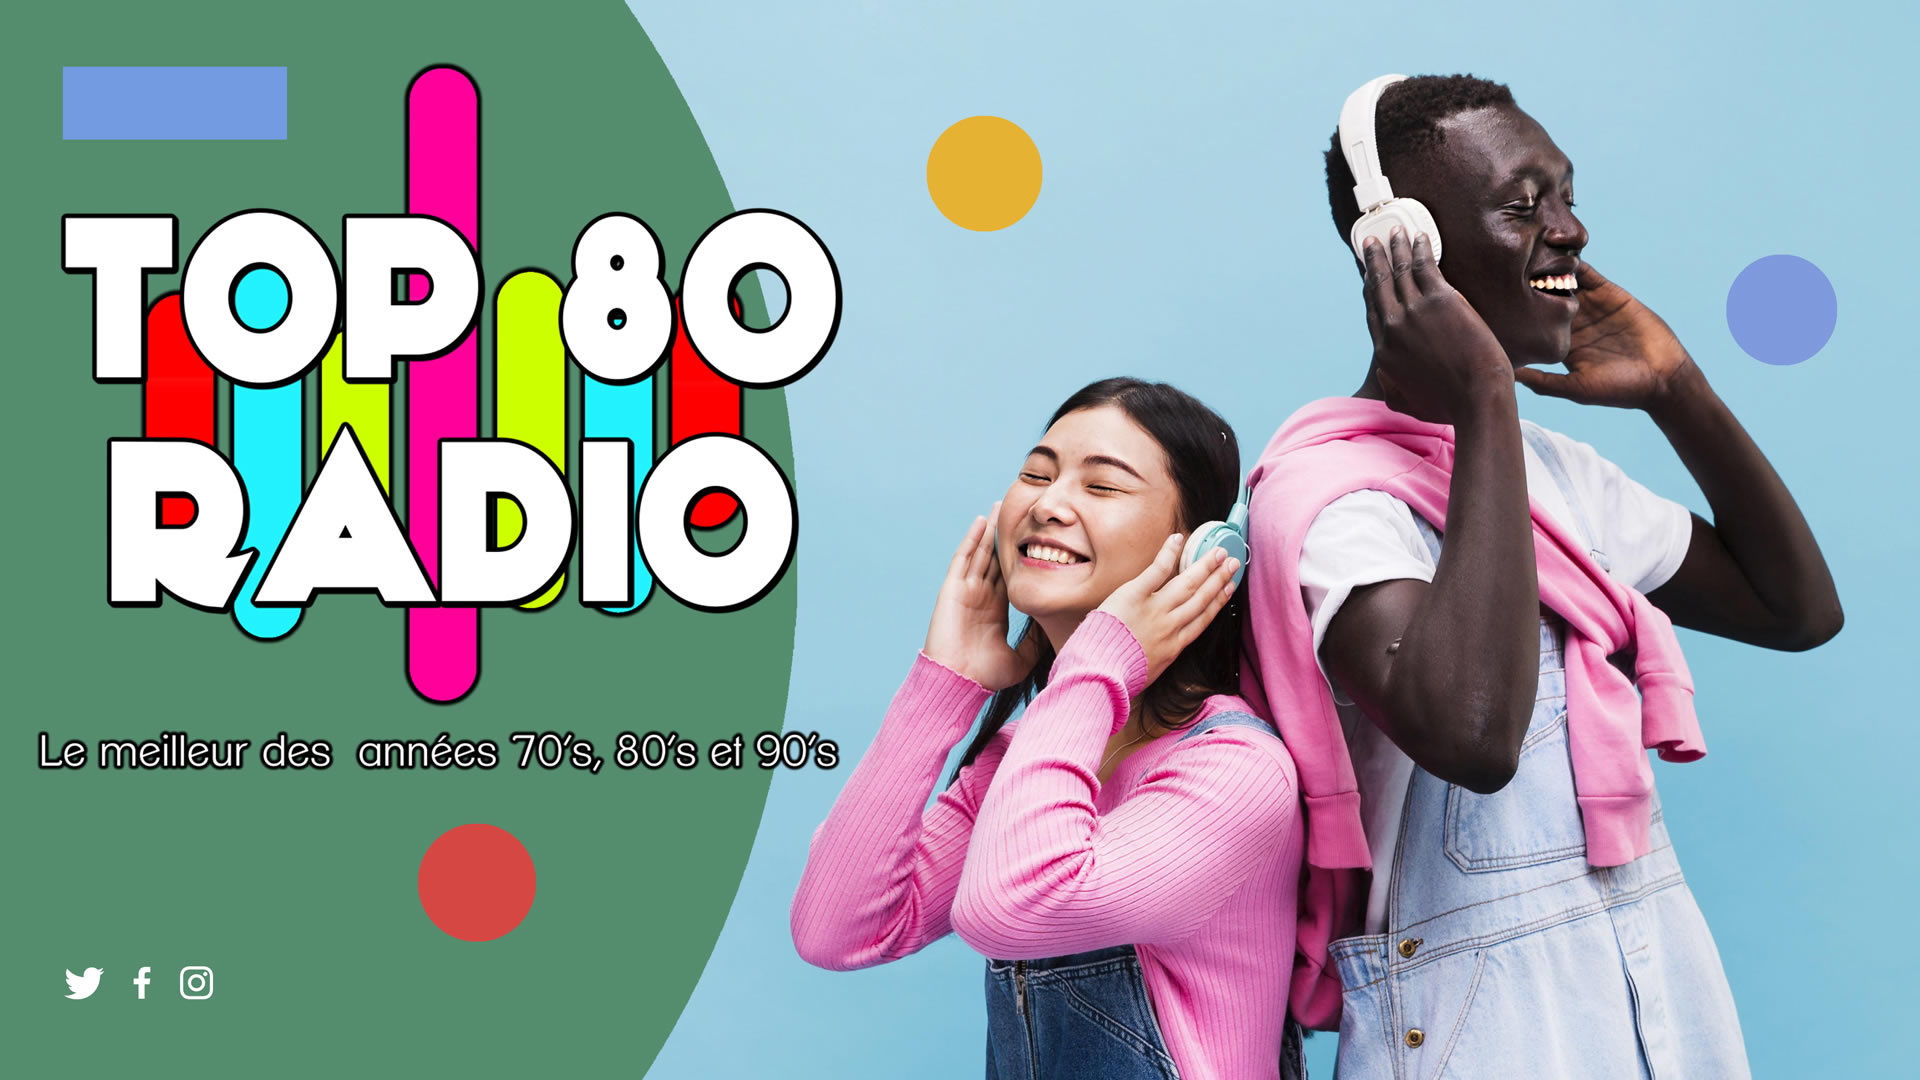 WALLPAPER–TOP-80-RADIO—70